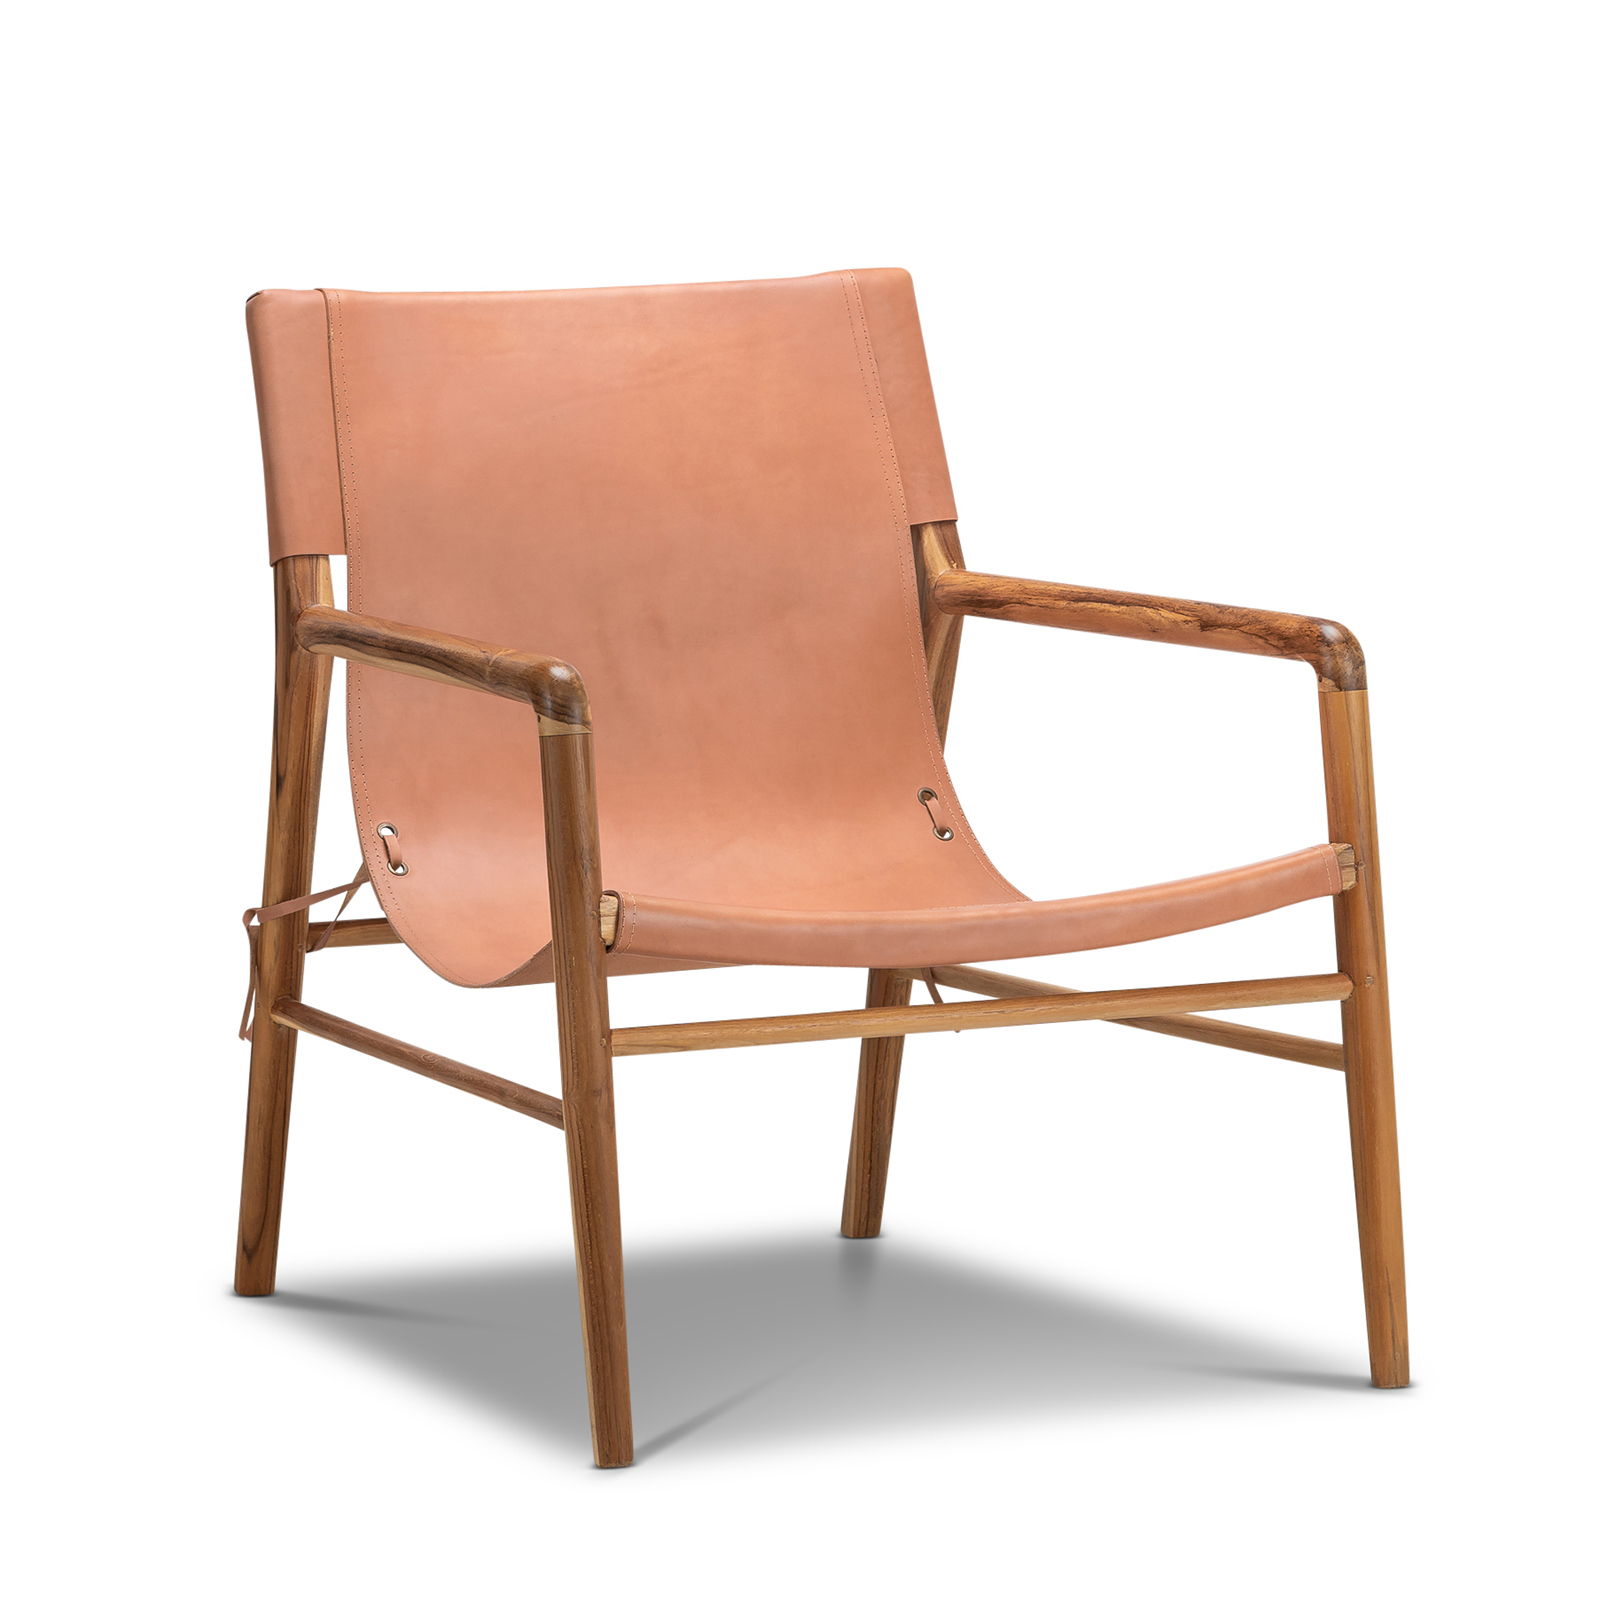 Norah Leather Sling Teakwood Armchair, Sling Leather Chair